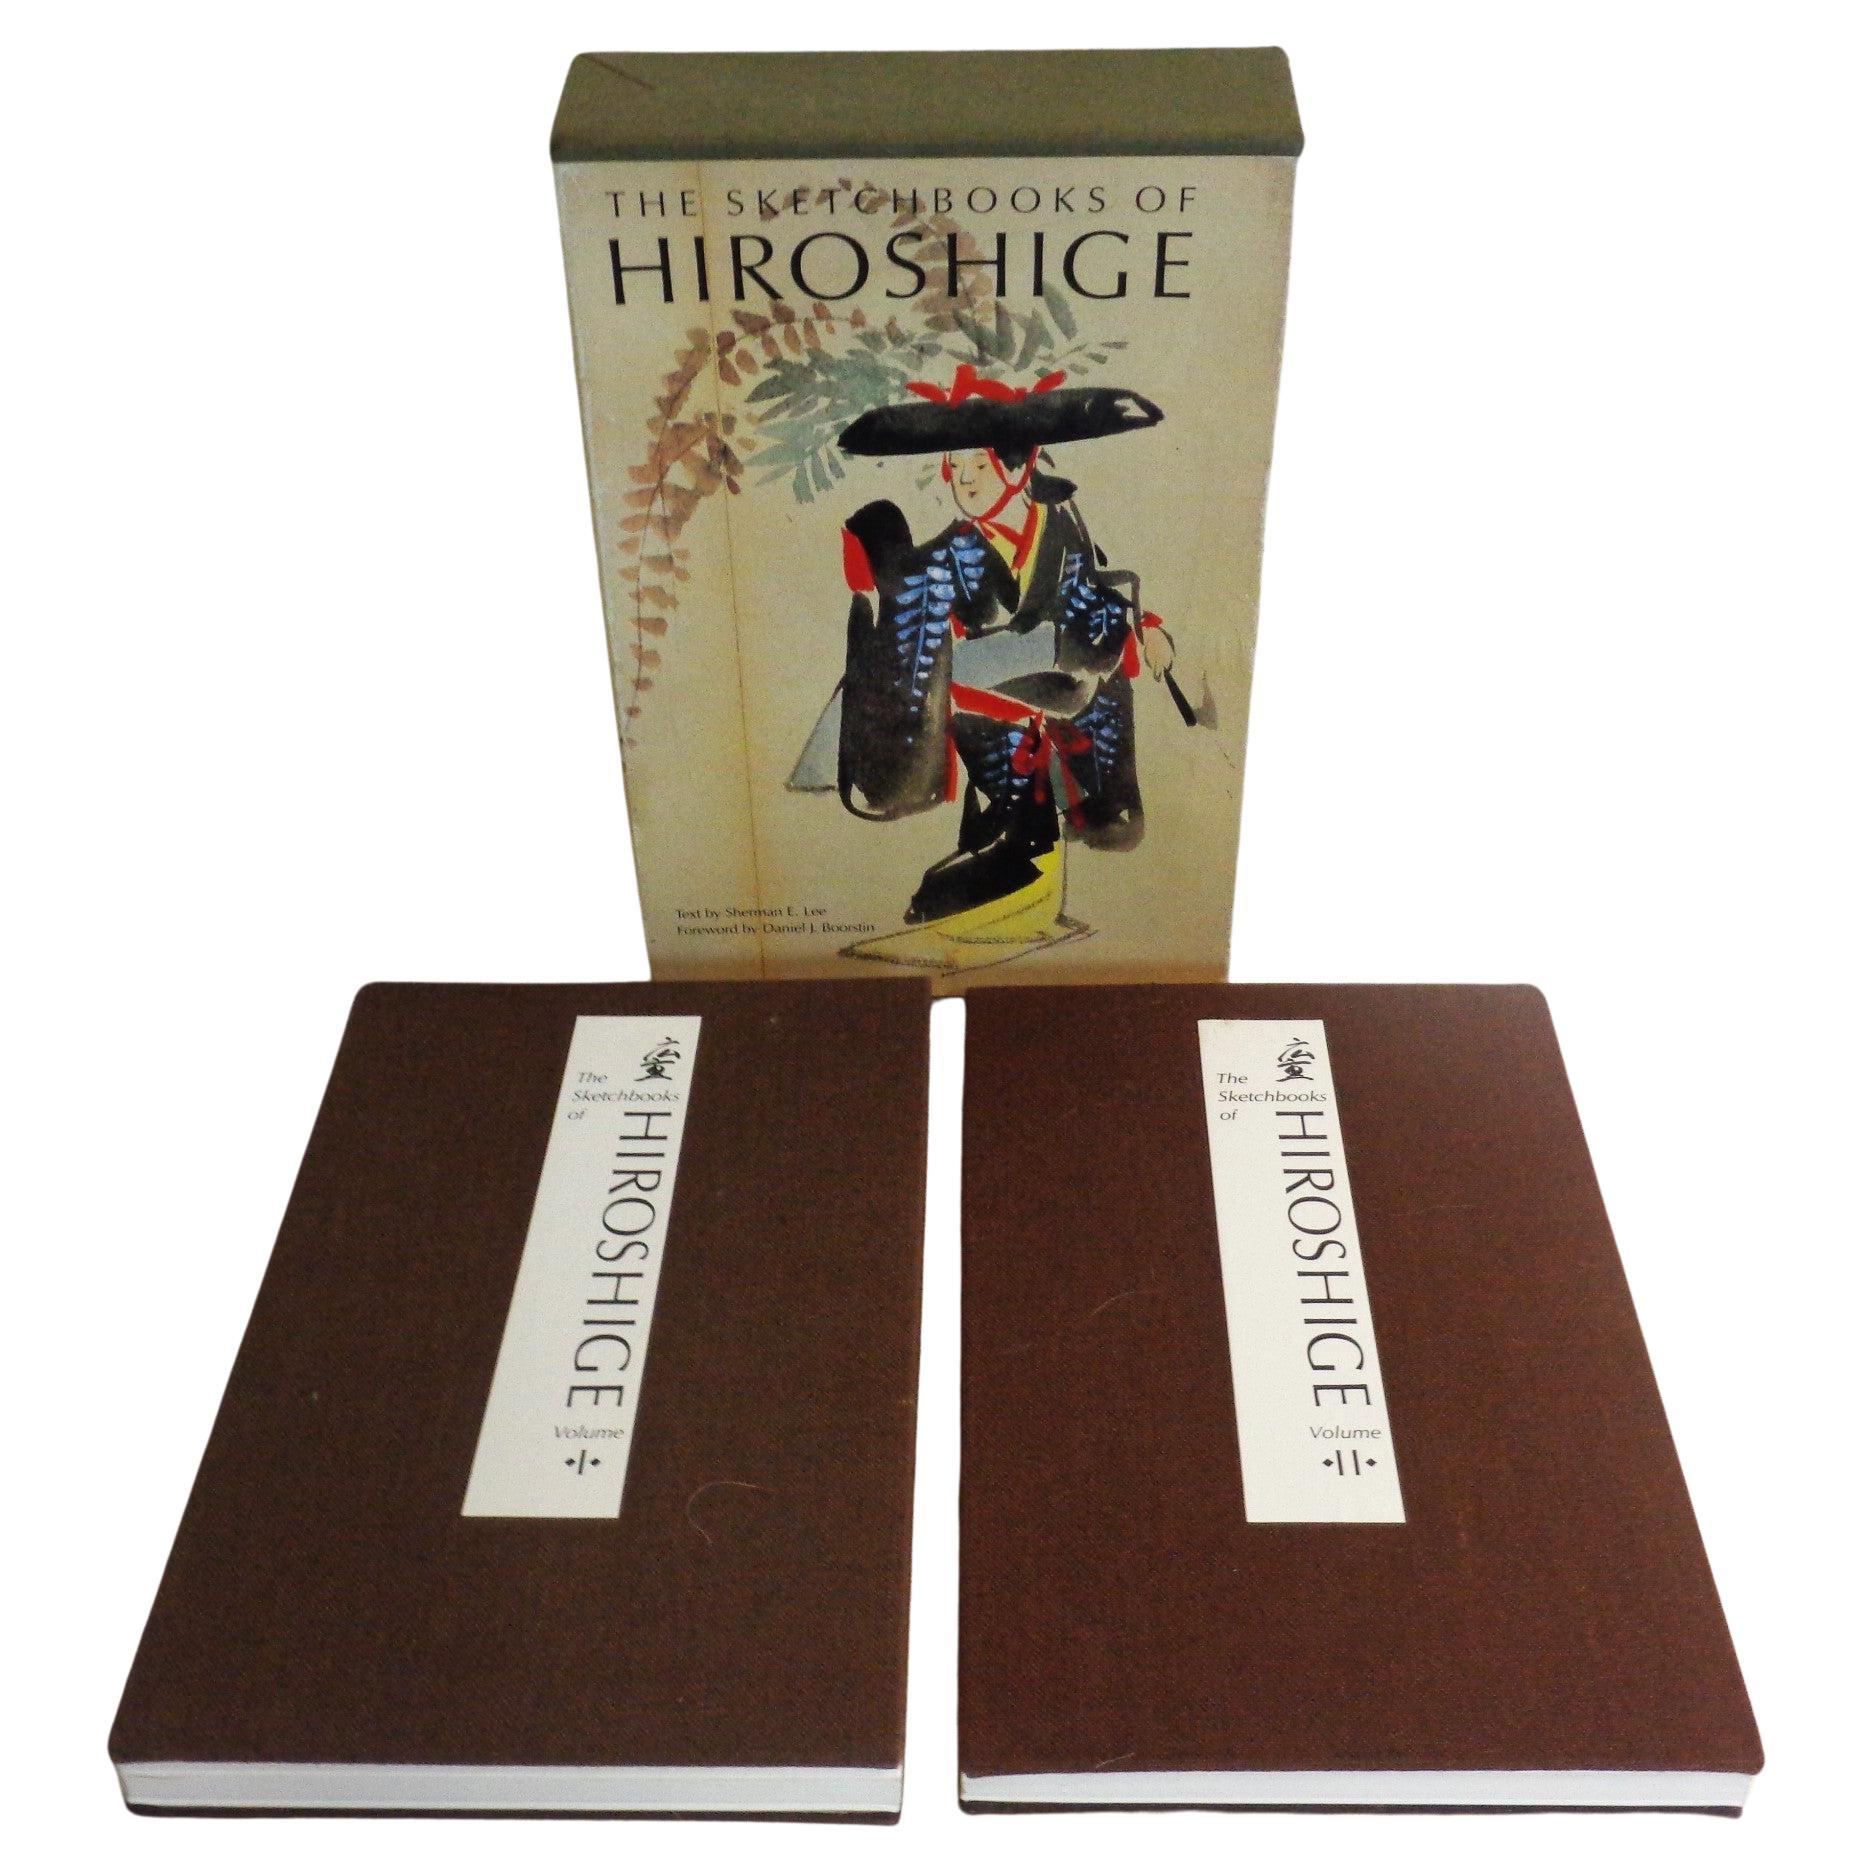 The Sketchbooks of Hiroshige, 1984 George Braziller - 1st Edition 4